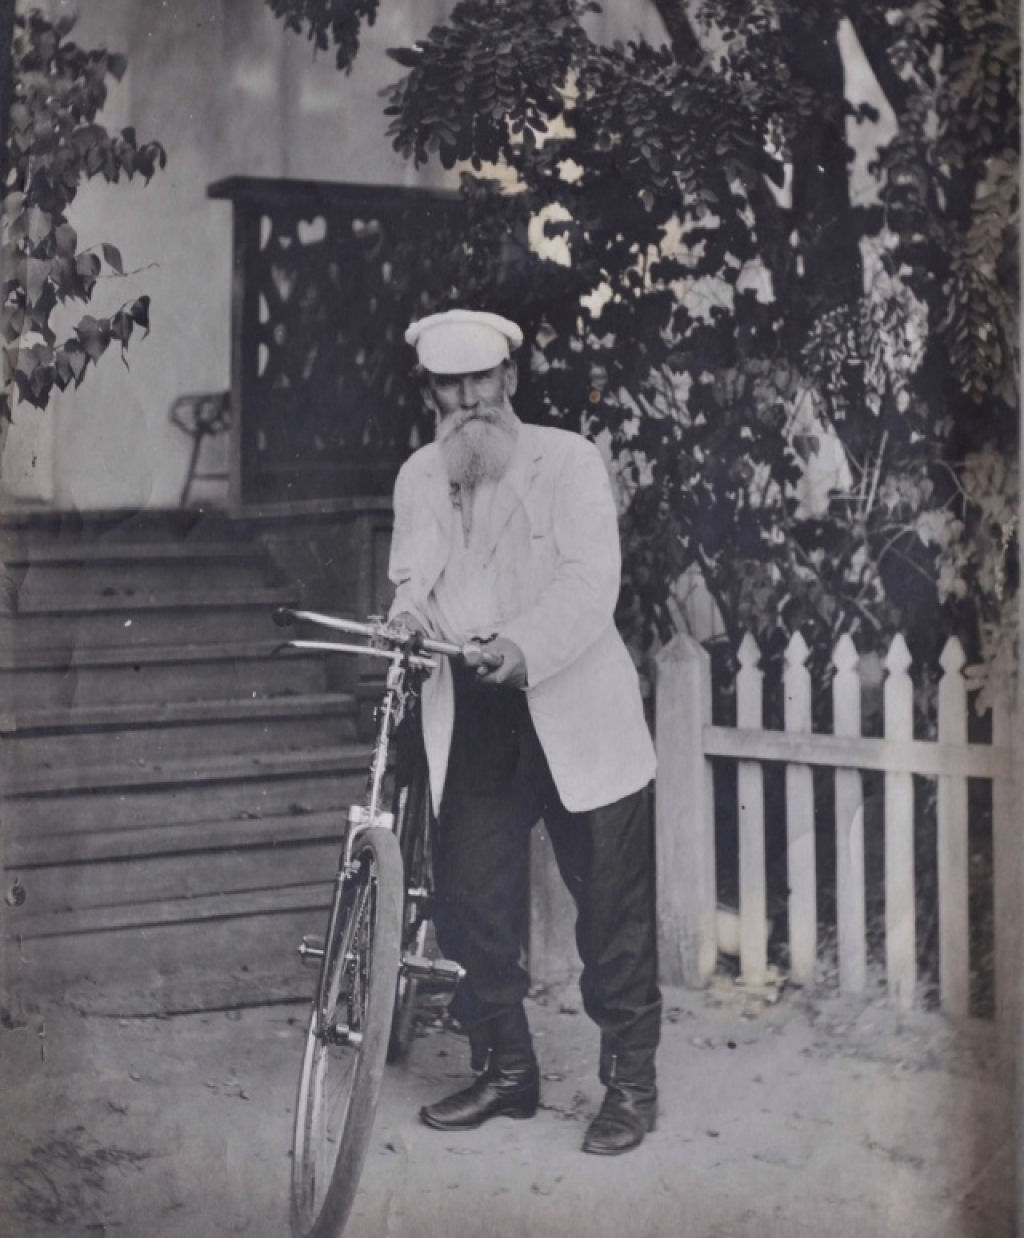 A bicicleta de Tolstói: a história inspiradora de como Leon Tolstói aprendeu a andar de bicicleta aos 67 anos